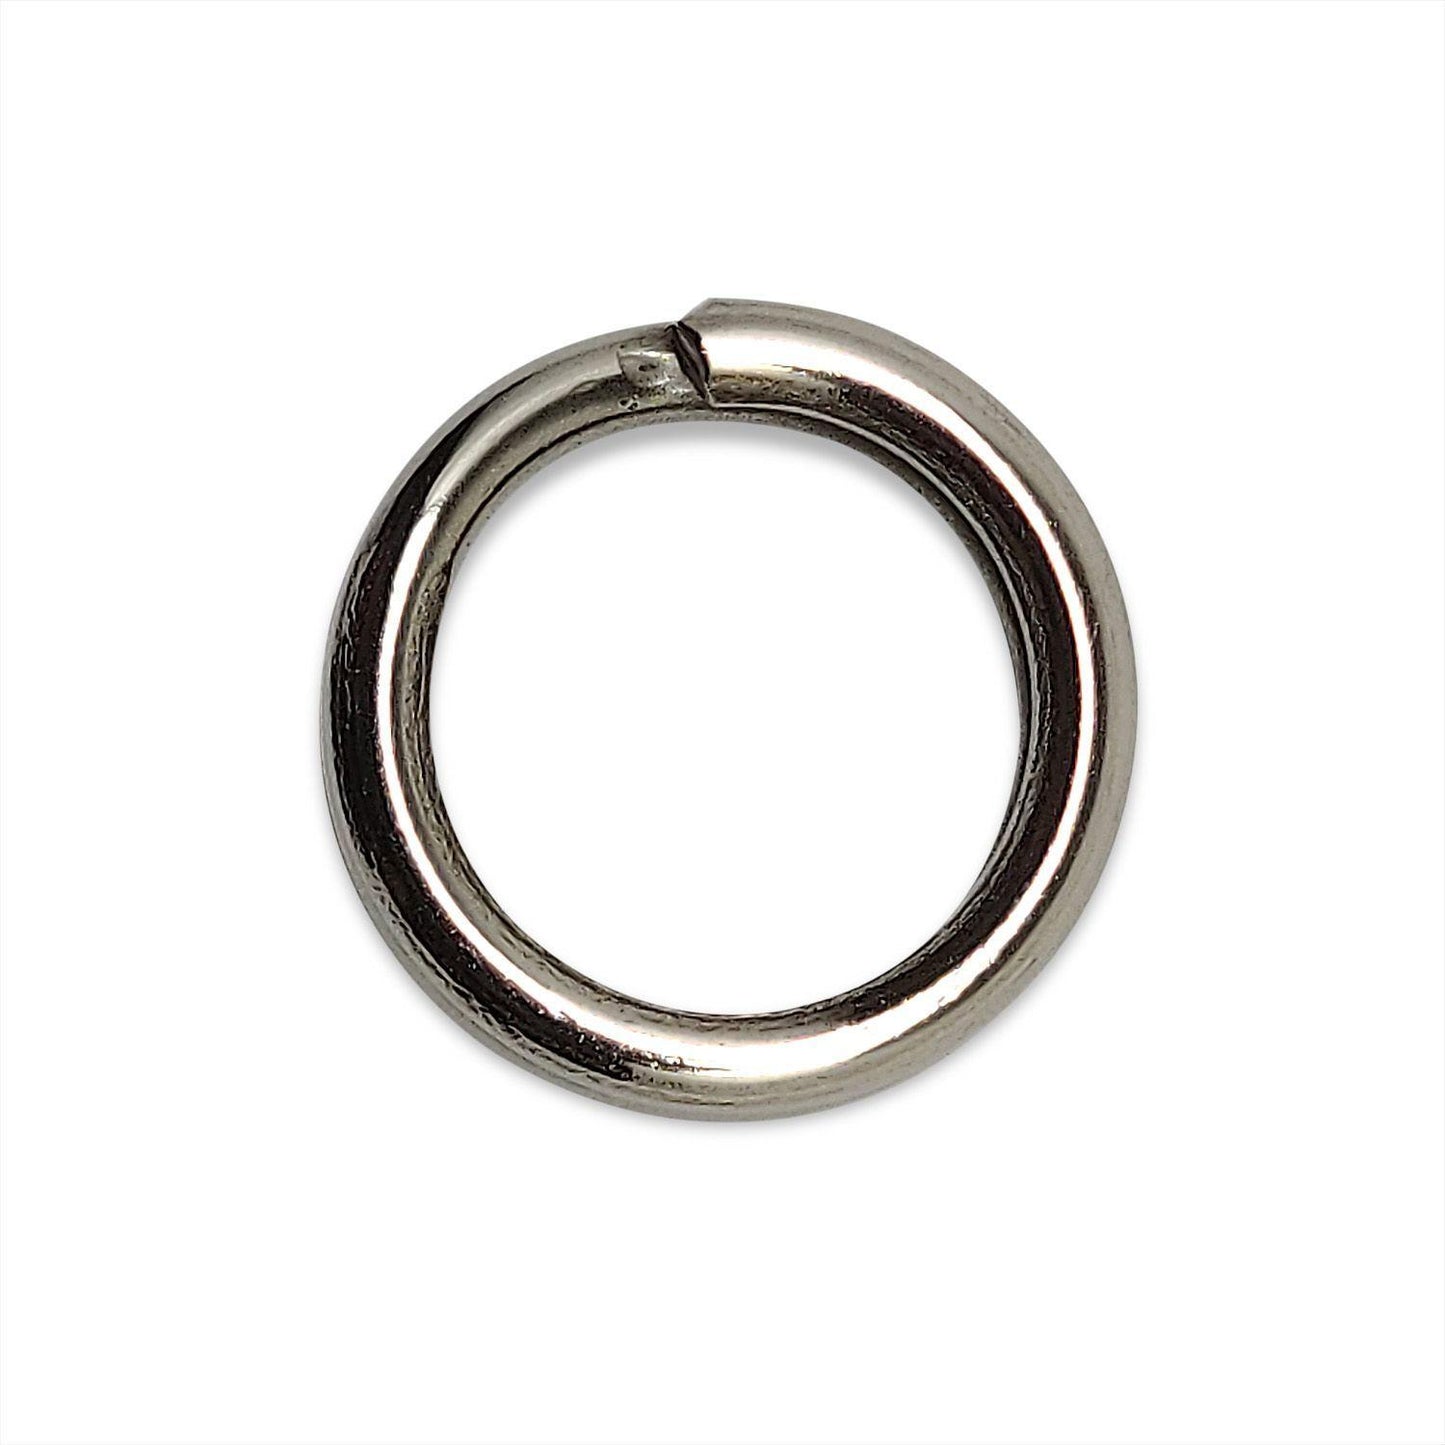 Gamakatsu 408000-3 Superline Split Ring, Stainless Steel, Size 3-44lb